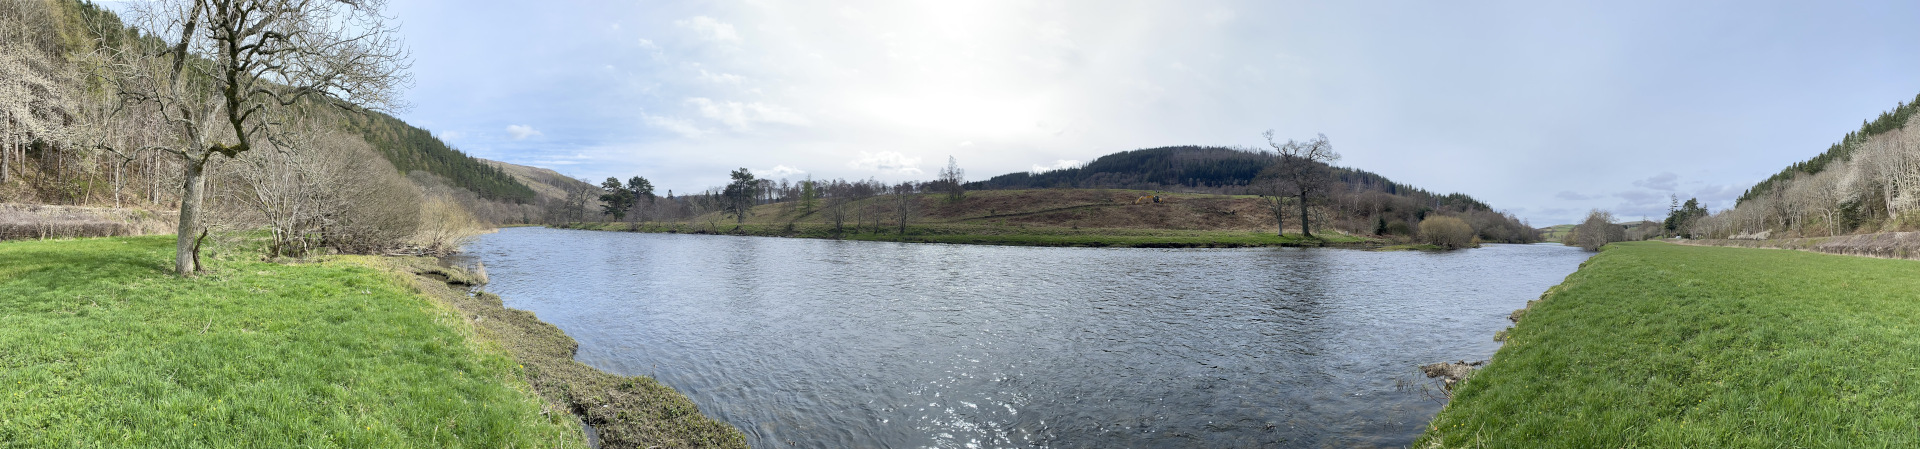 River Tweed running through the Yair Valley